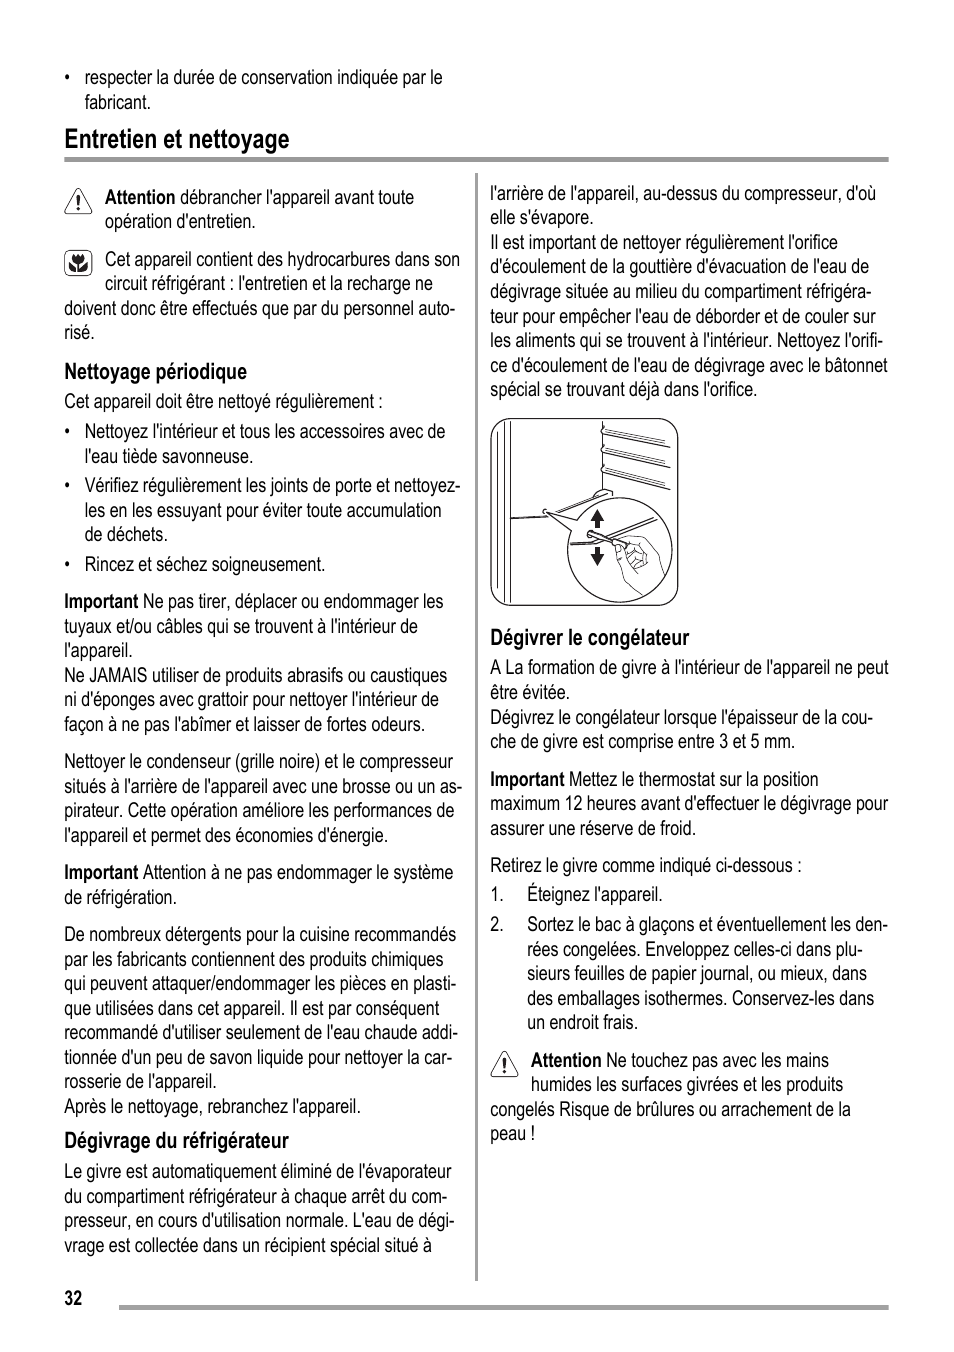 Entretien et nettoyage | ZANKER KBB 24001 SK User Manual | Page 32 / 56